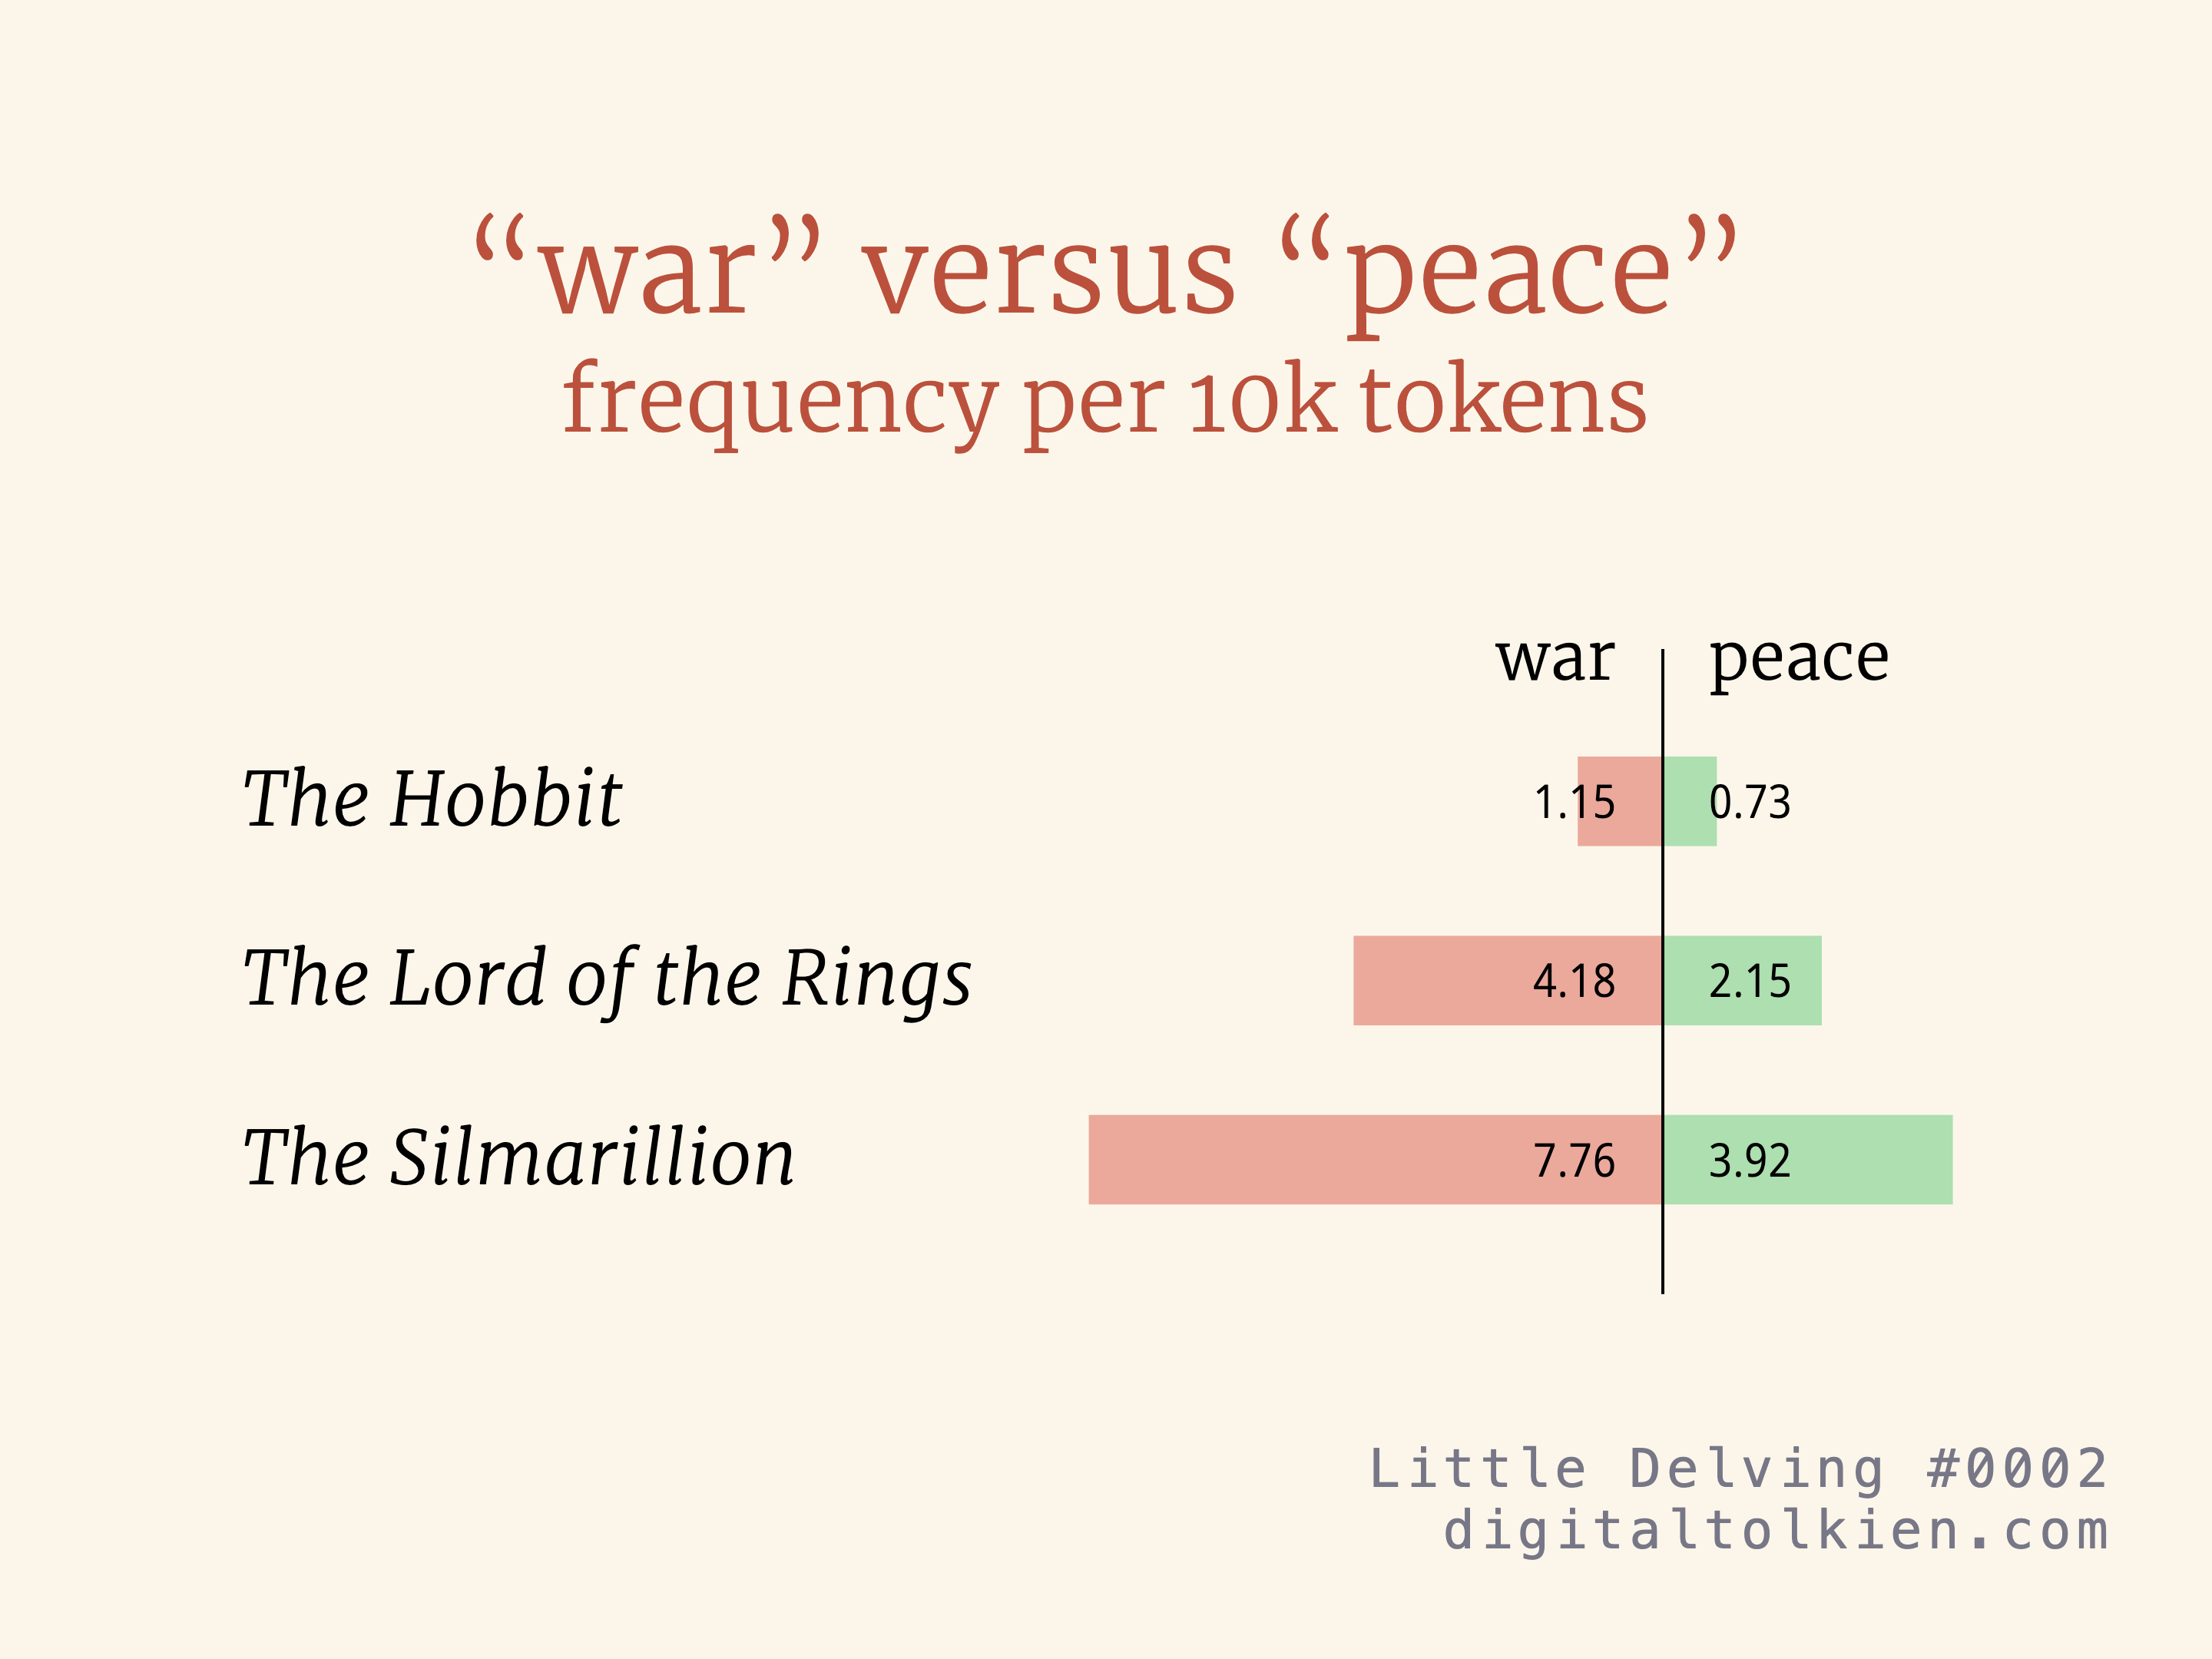 “war” versus “peace” frequency per 10k tokens
        The Hobbit: war 1.15, peace 0.73
        The Lord of the Rings: war 4.18, peace 2.15
        The Silmarillion: war 7.76, peace 3.92
        Little Delving #0002
        digitaltolkien.com
        